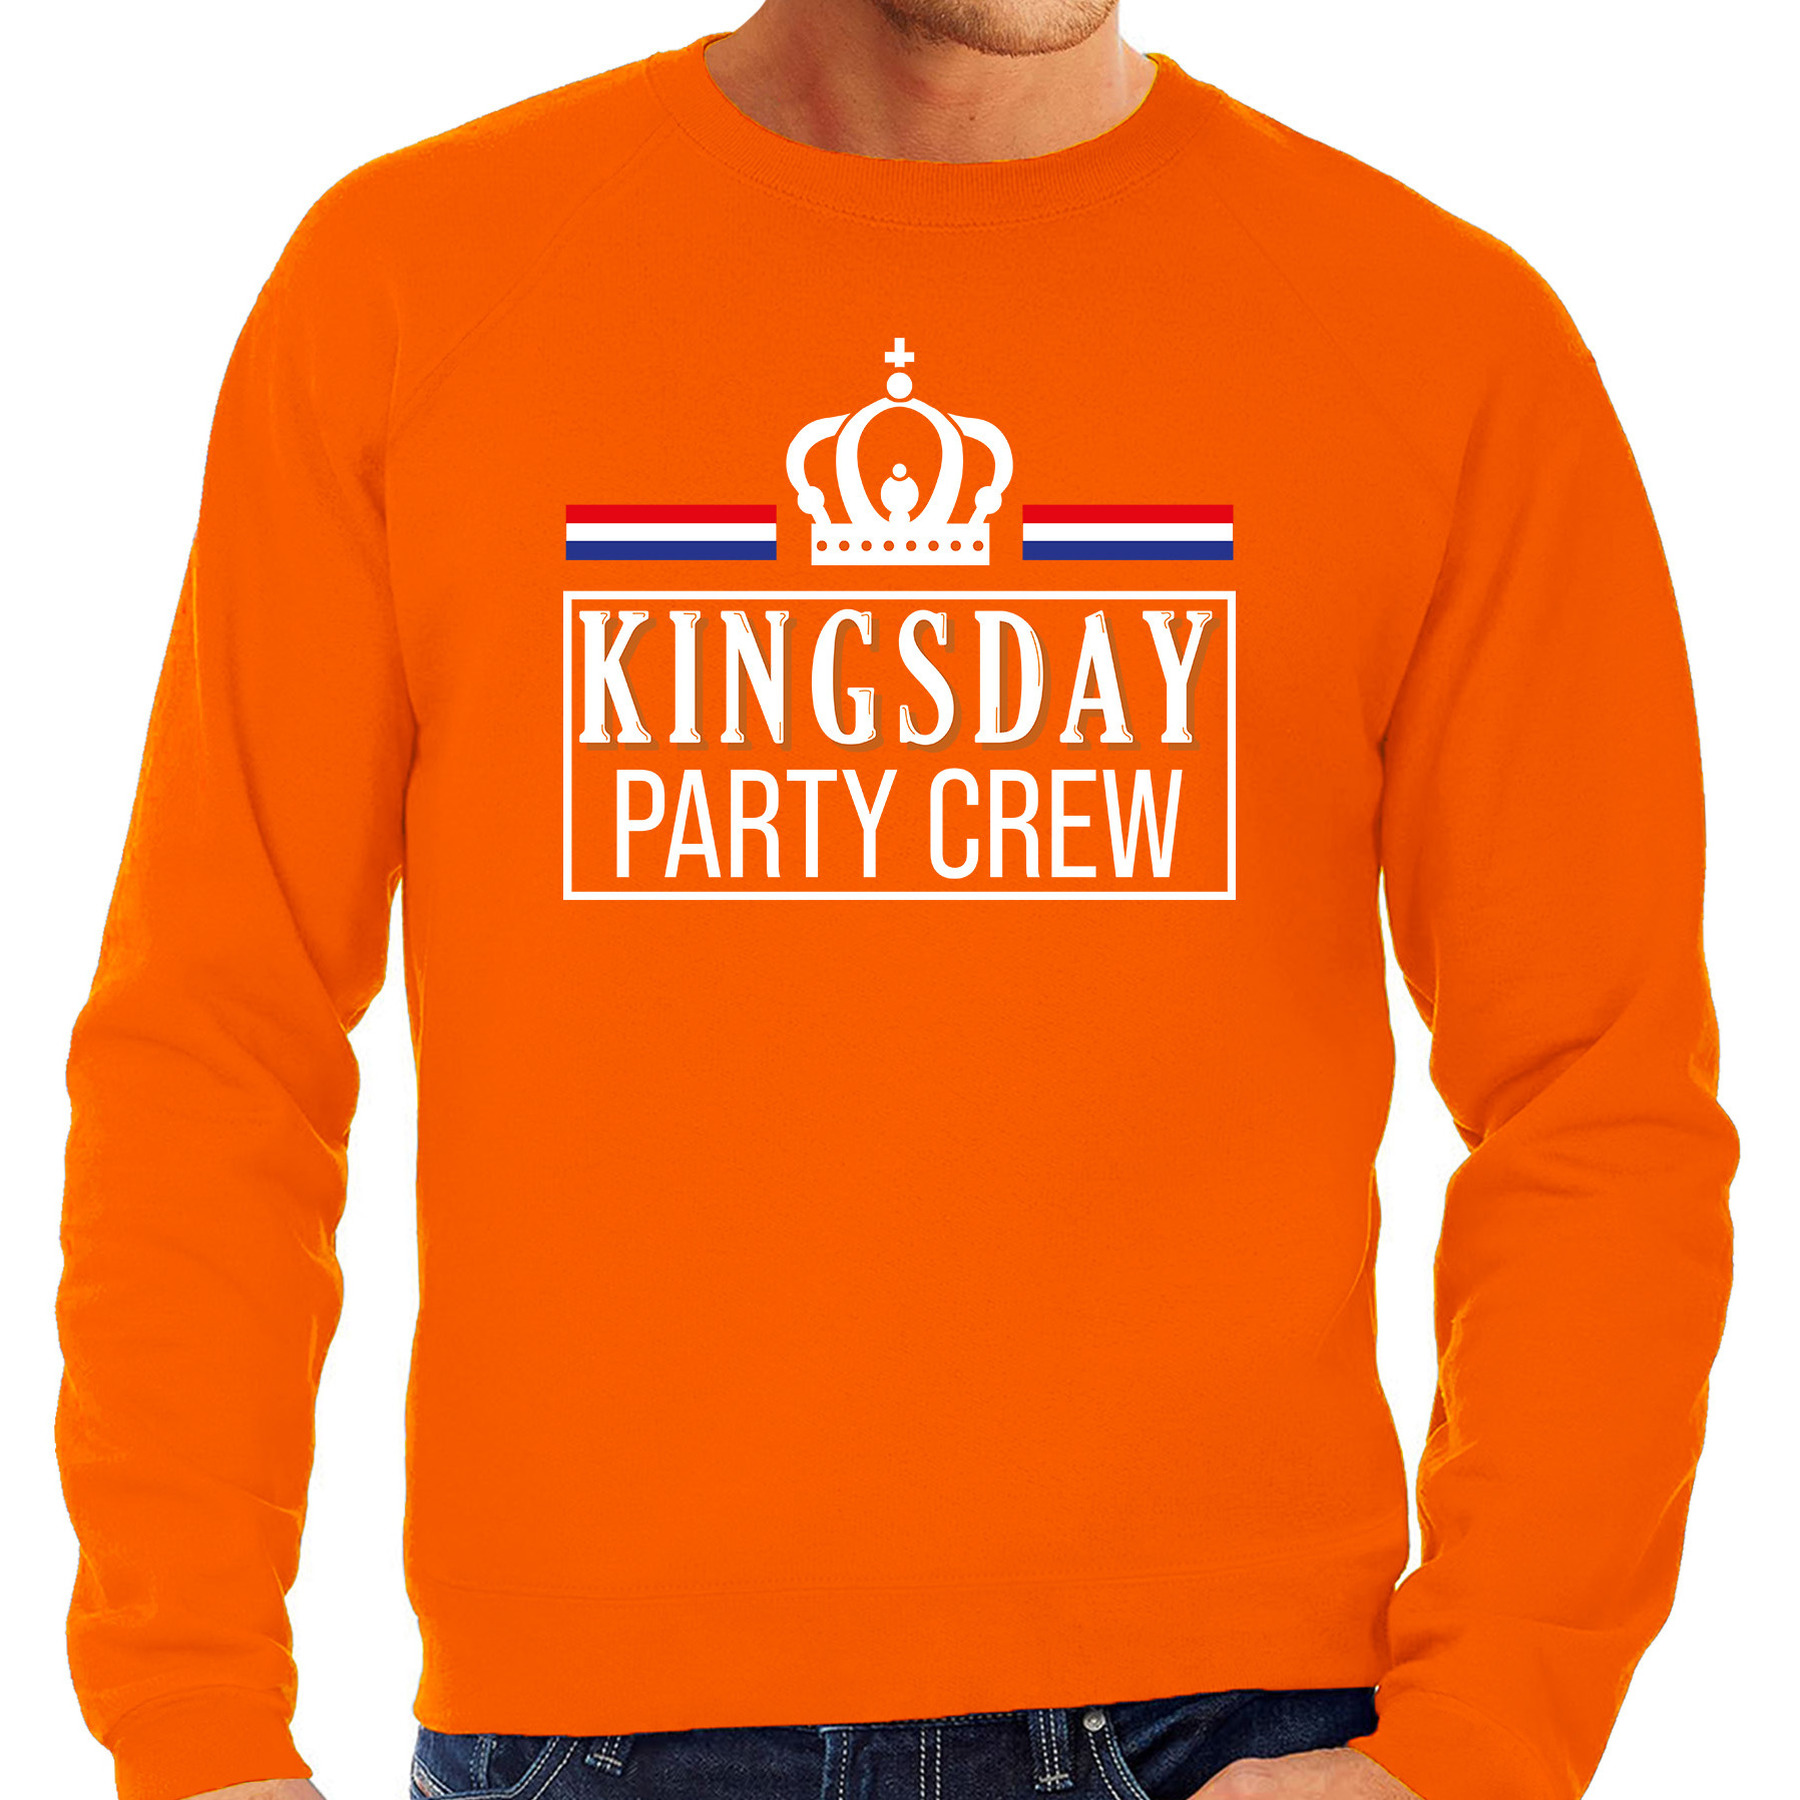 Kingsday party crew sweater oranje met witte letters voor heren Koningsdag truien